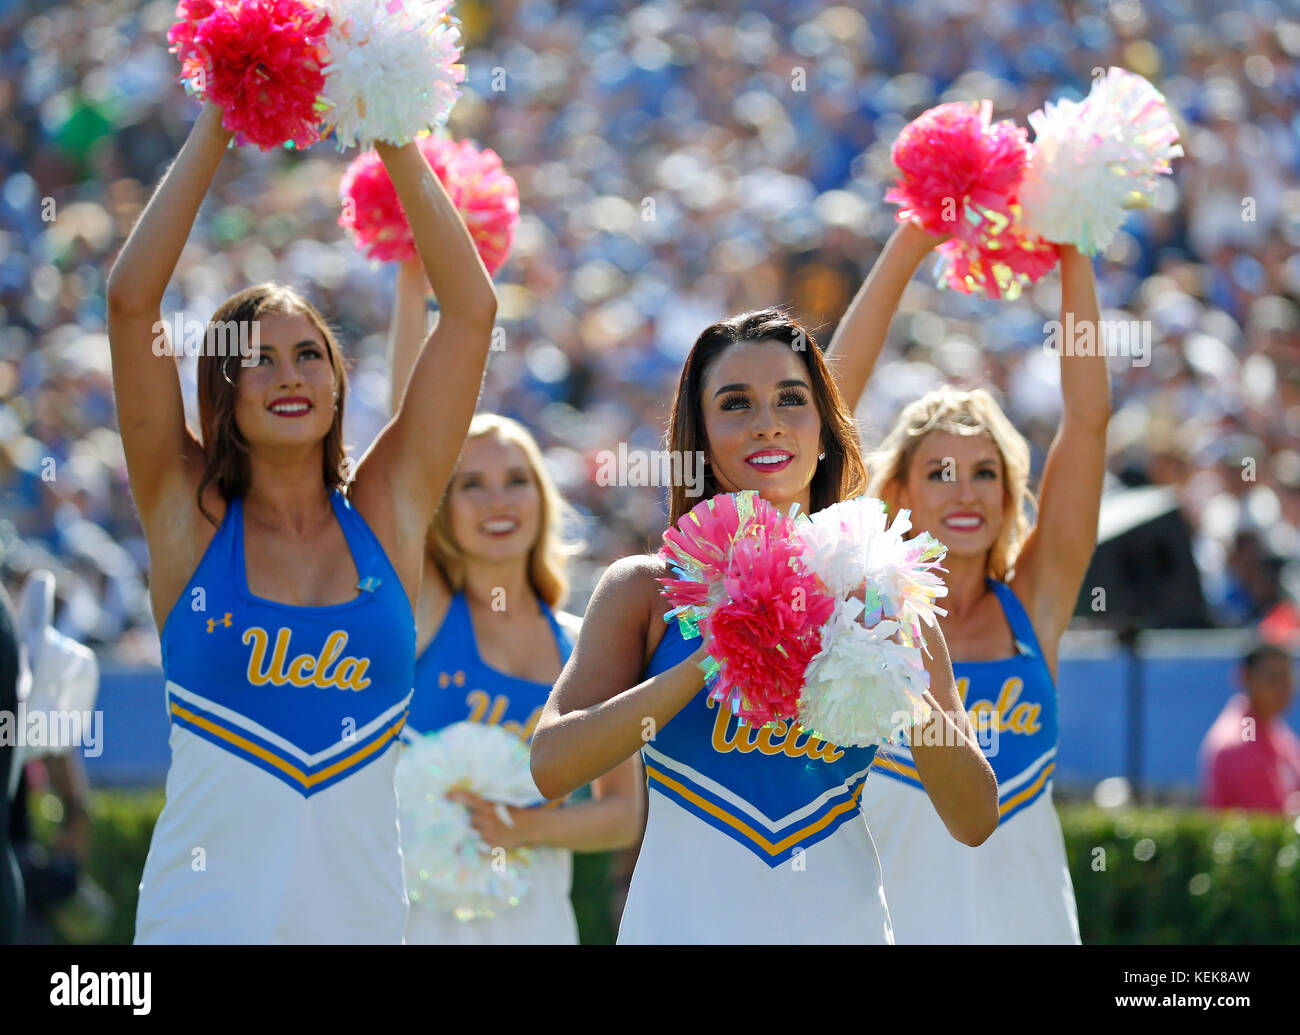 ucla cheer uniforms - Google Search  Cheer outfits, Cheer uniform, Cheer  team